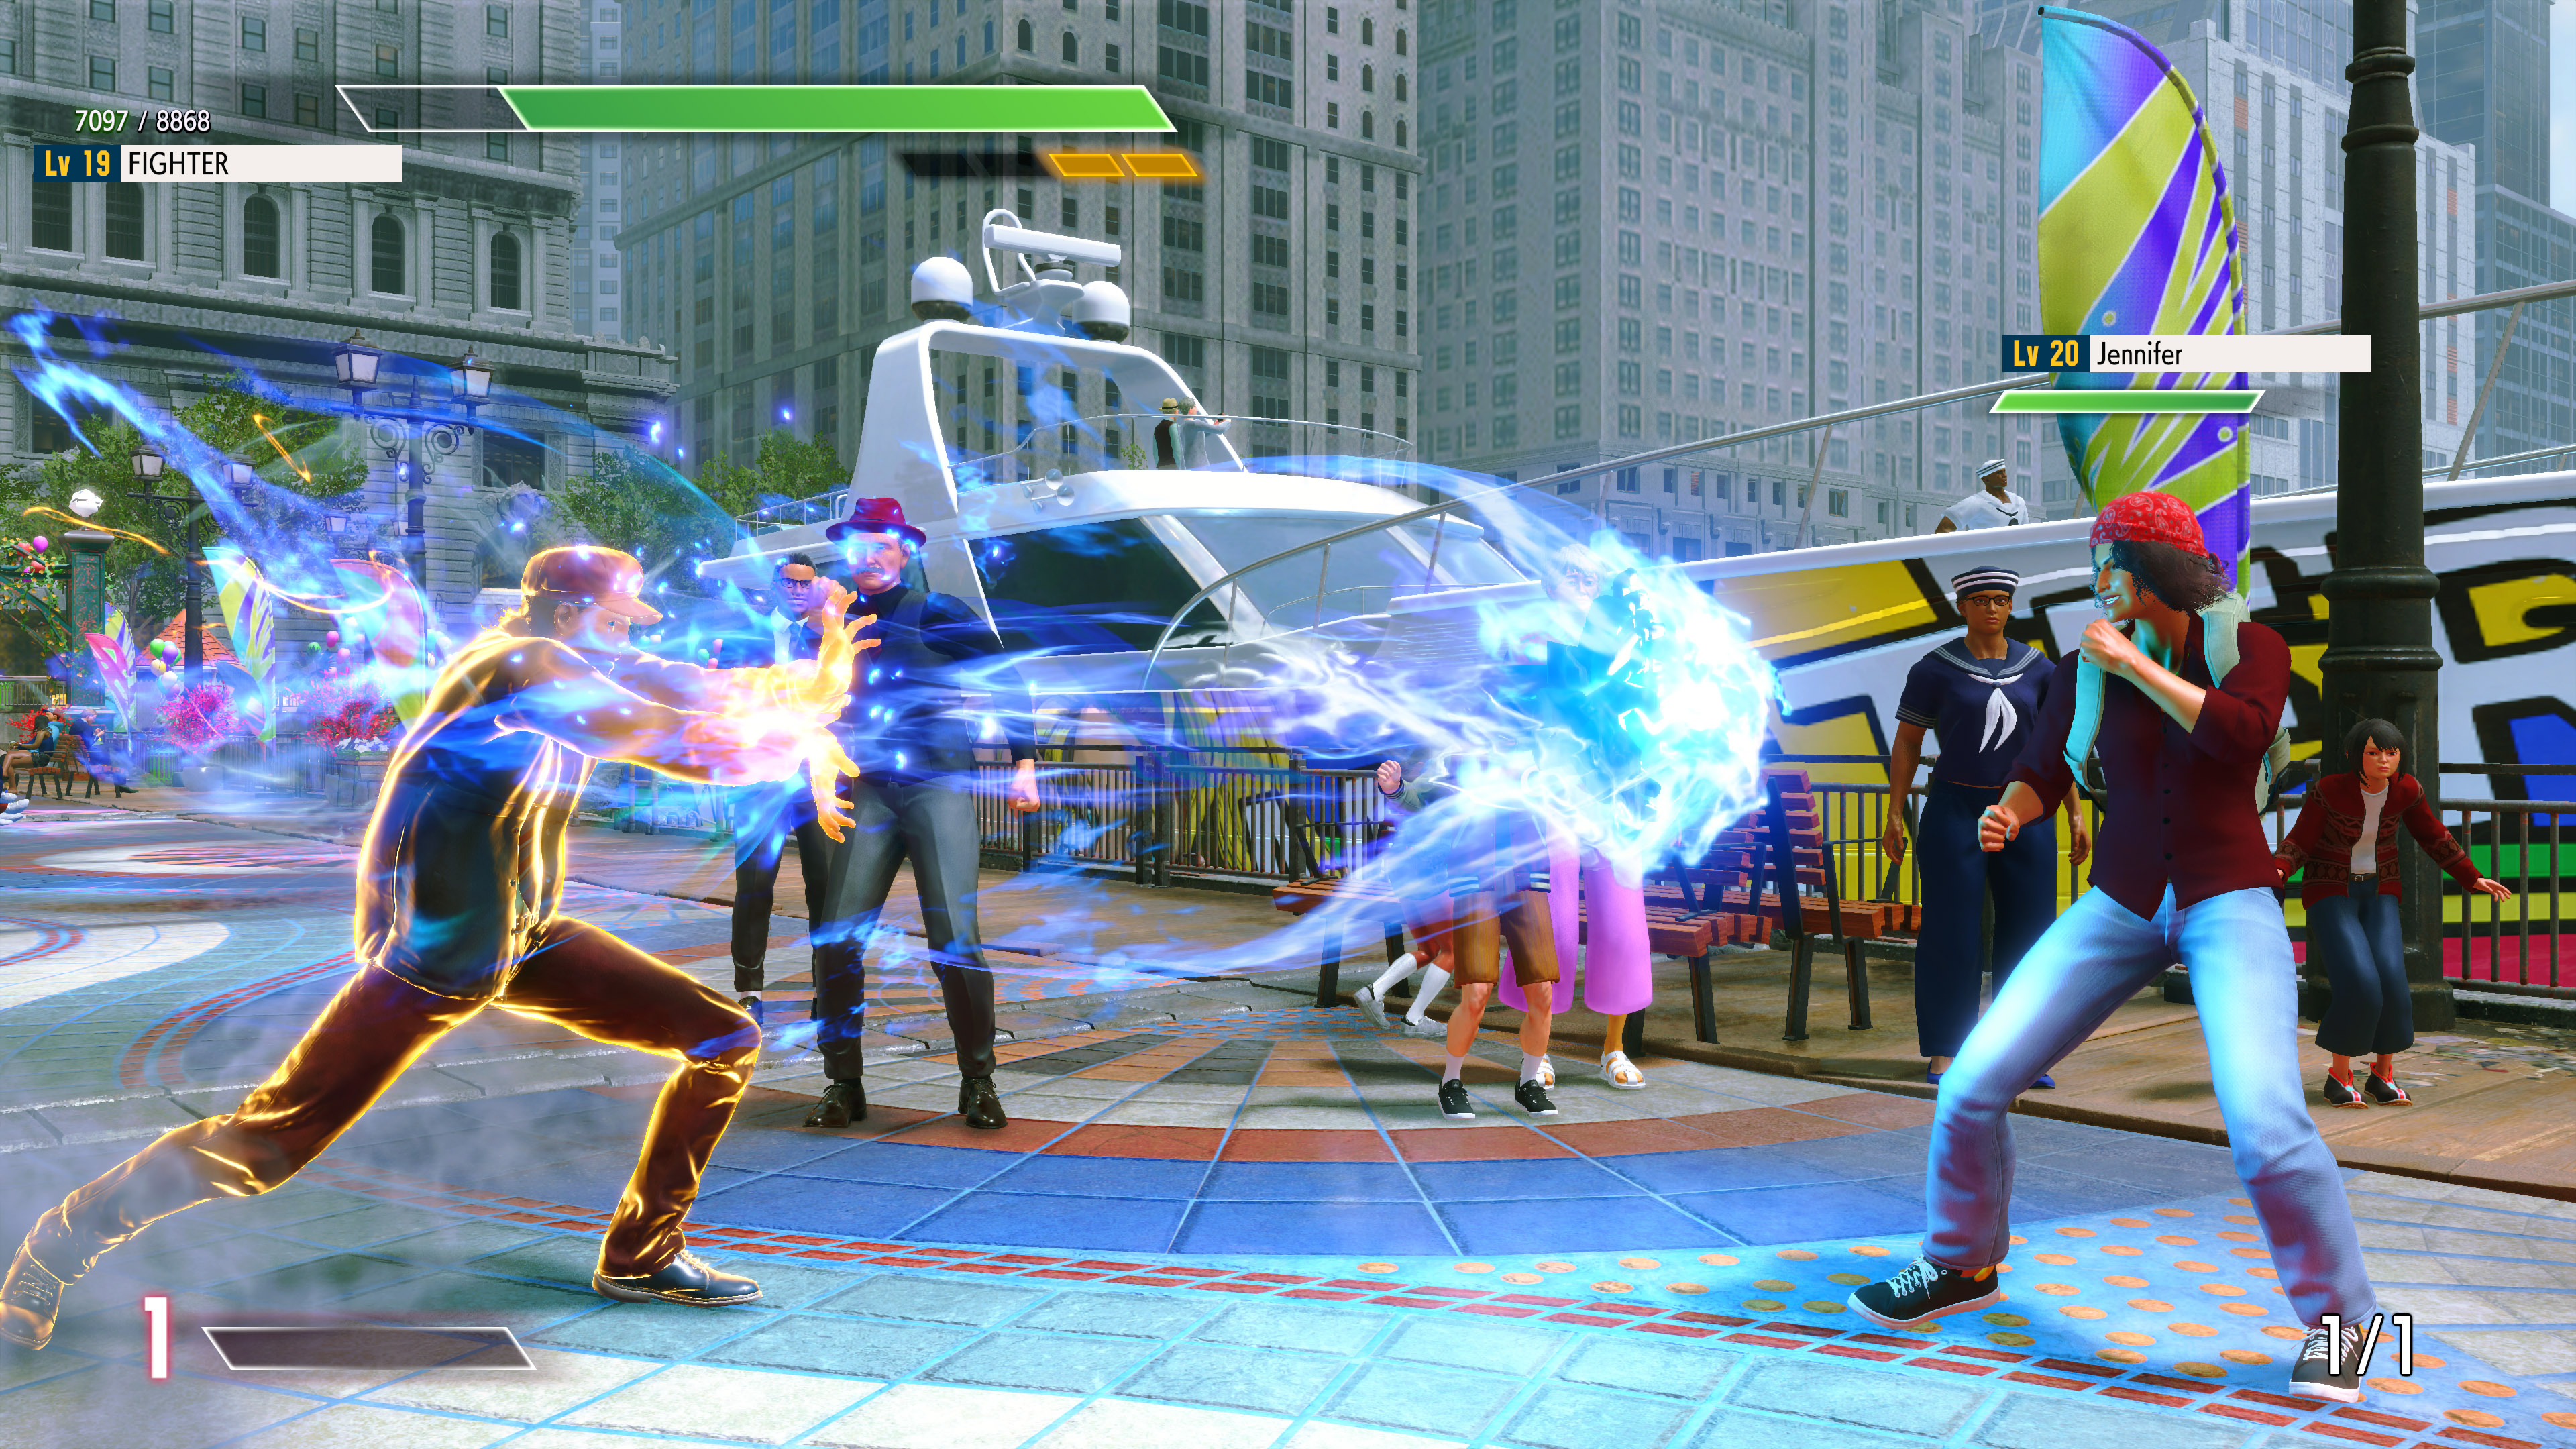 New Street Fighter 6 Beta Video Details Battle Hub and Avatar